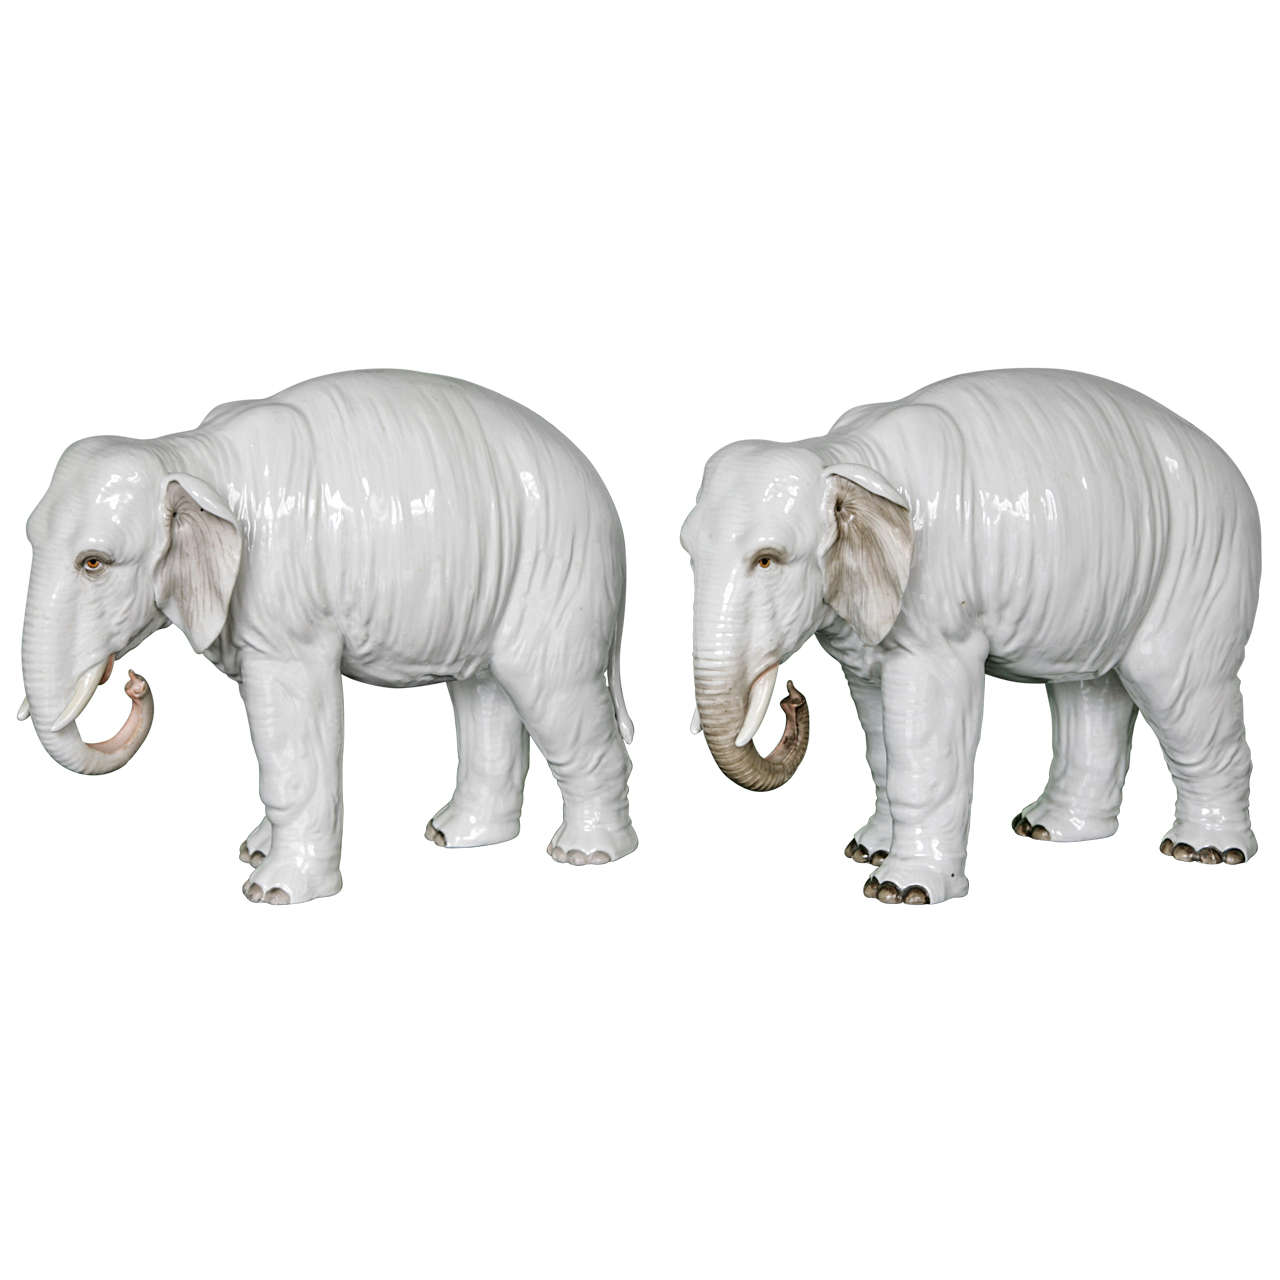 Pair of Large White Porcelain Elephants